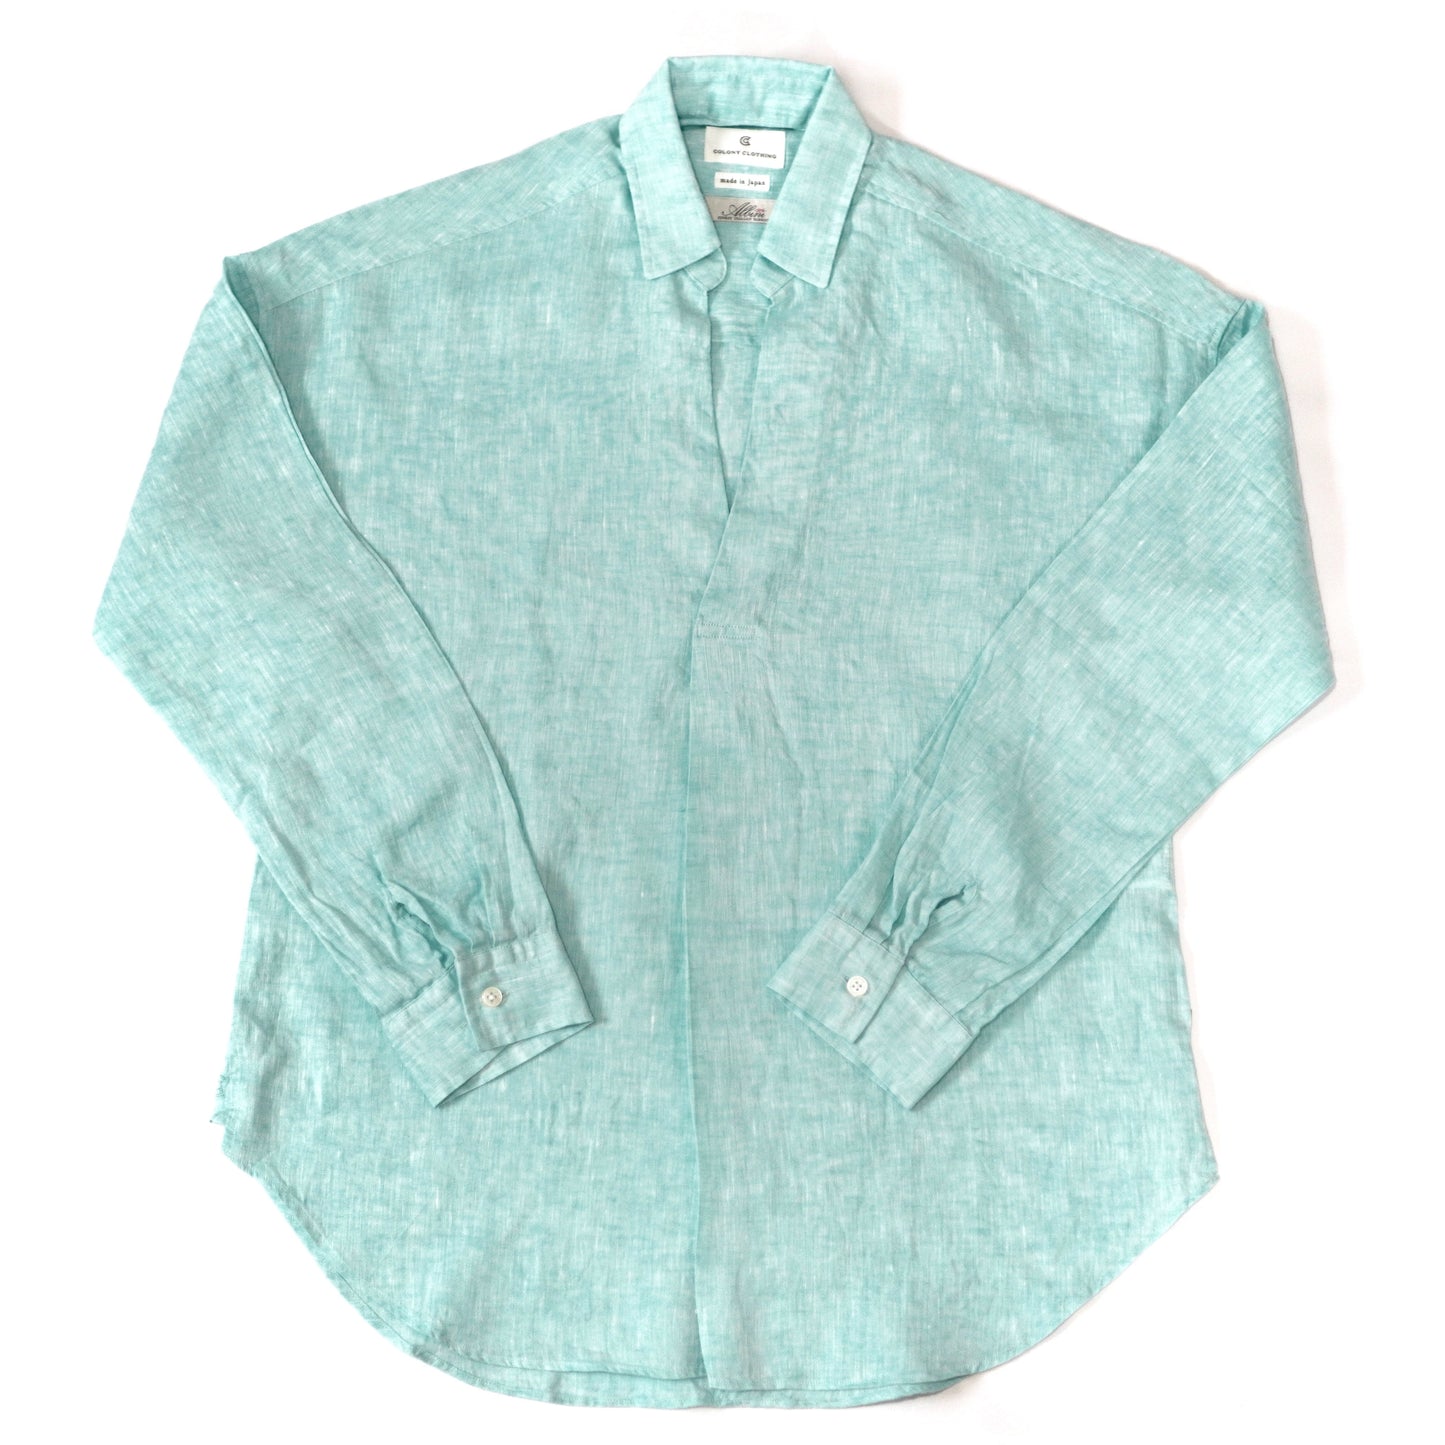 COLONY CLOTHING / Albini リネン プールサイドシャツ / CC20-SH01